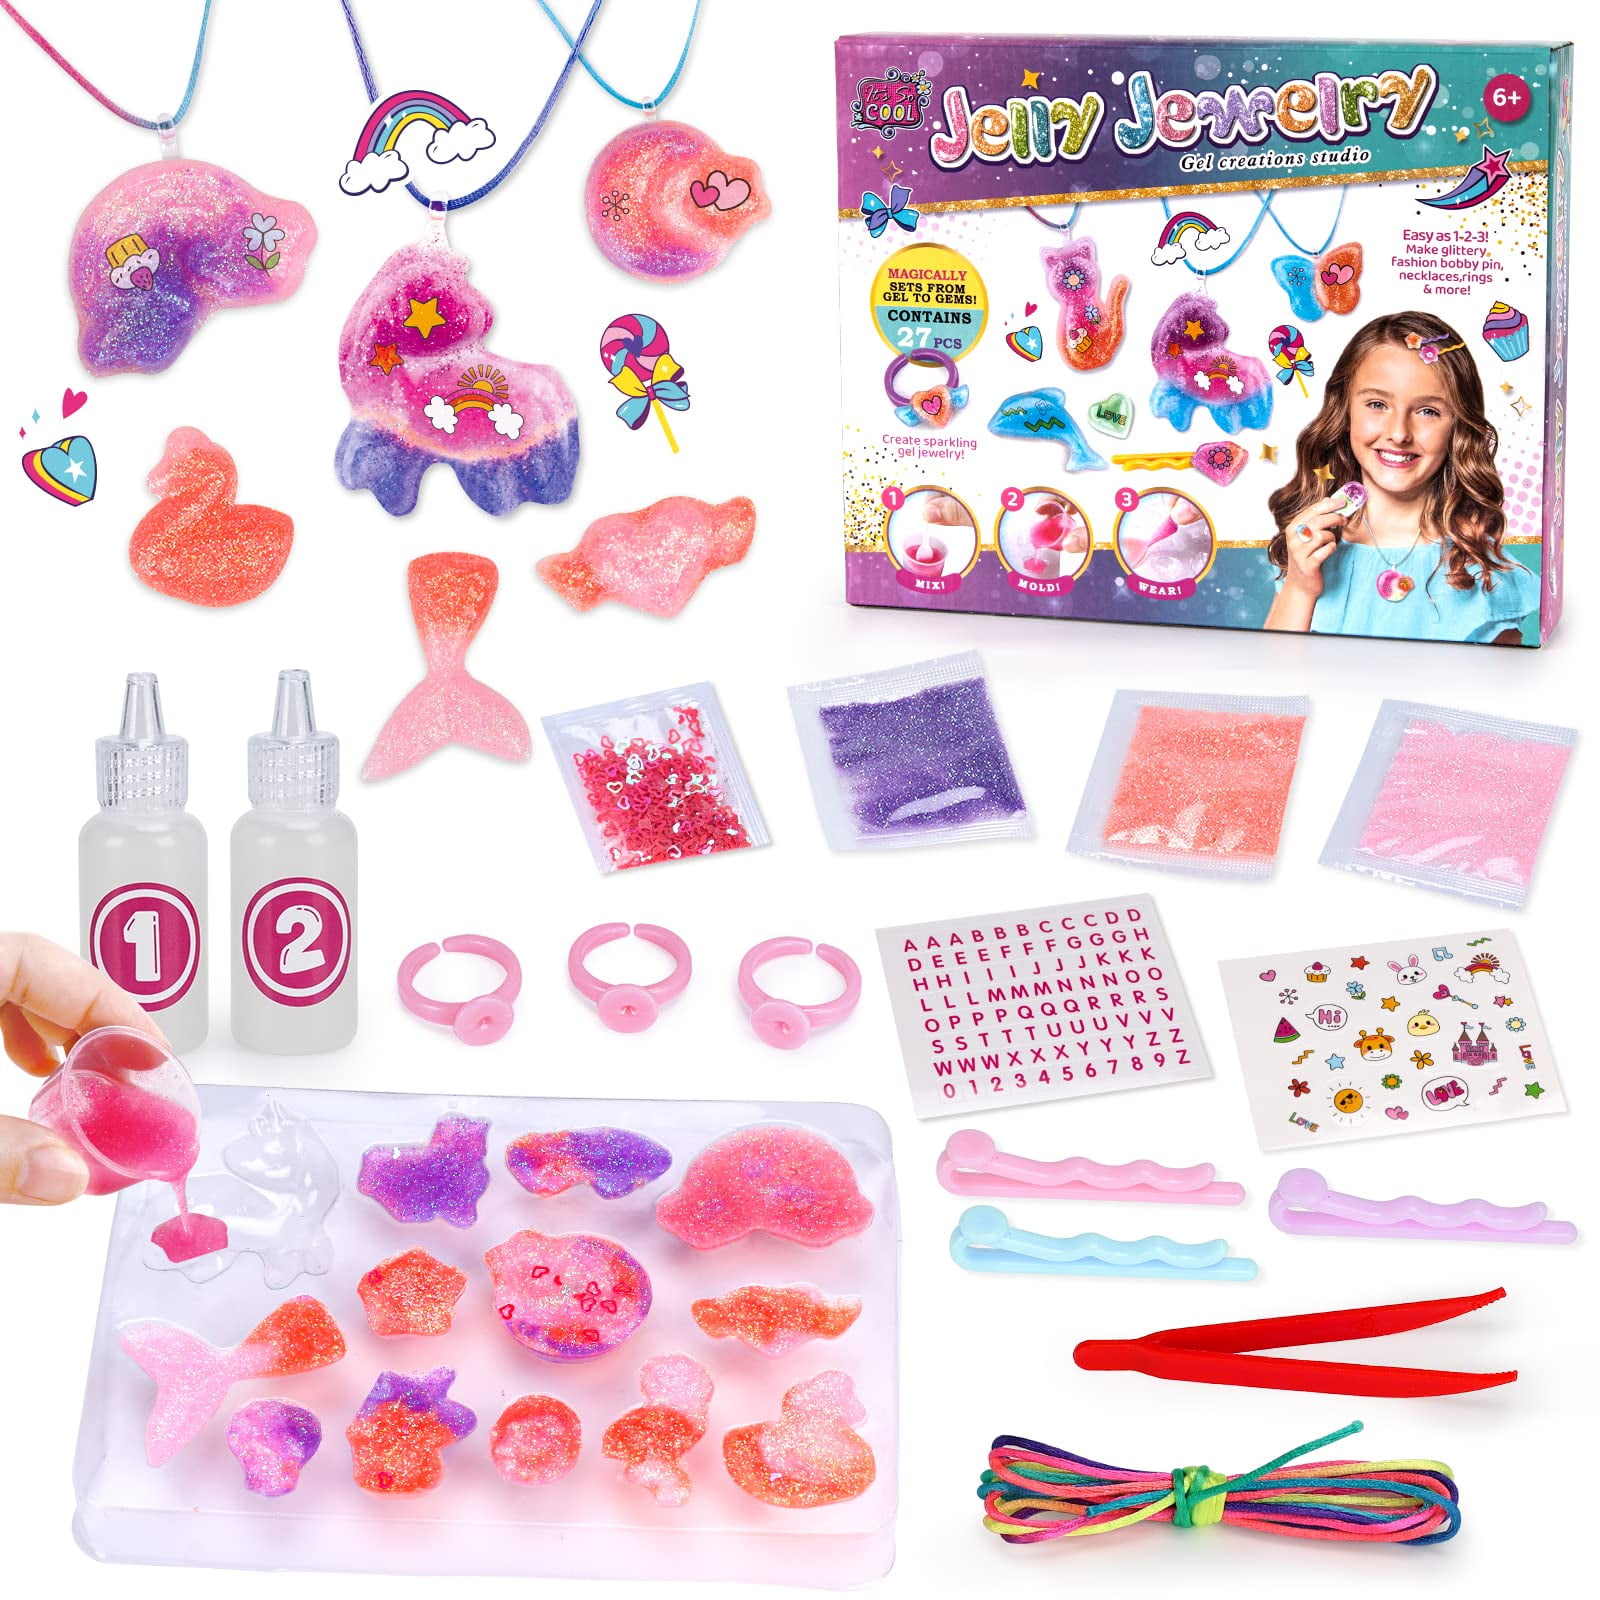 Dikence Craft Gifts for 8 9 10 Year Old Girls, DIY Kids Arts Kits